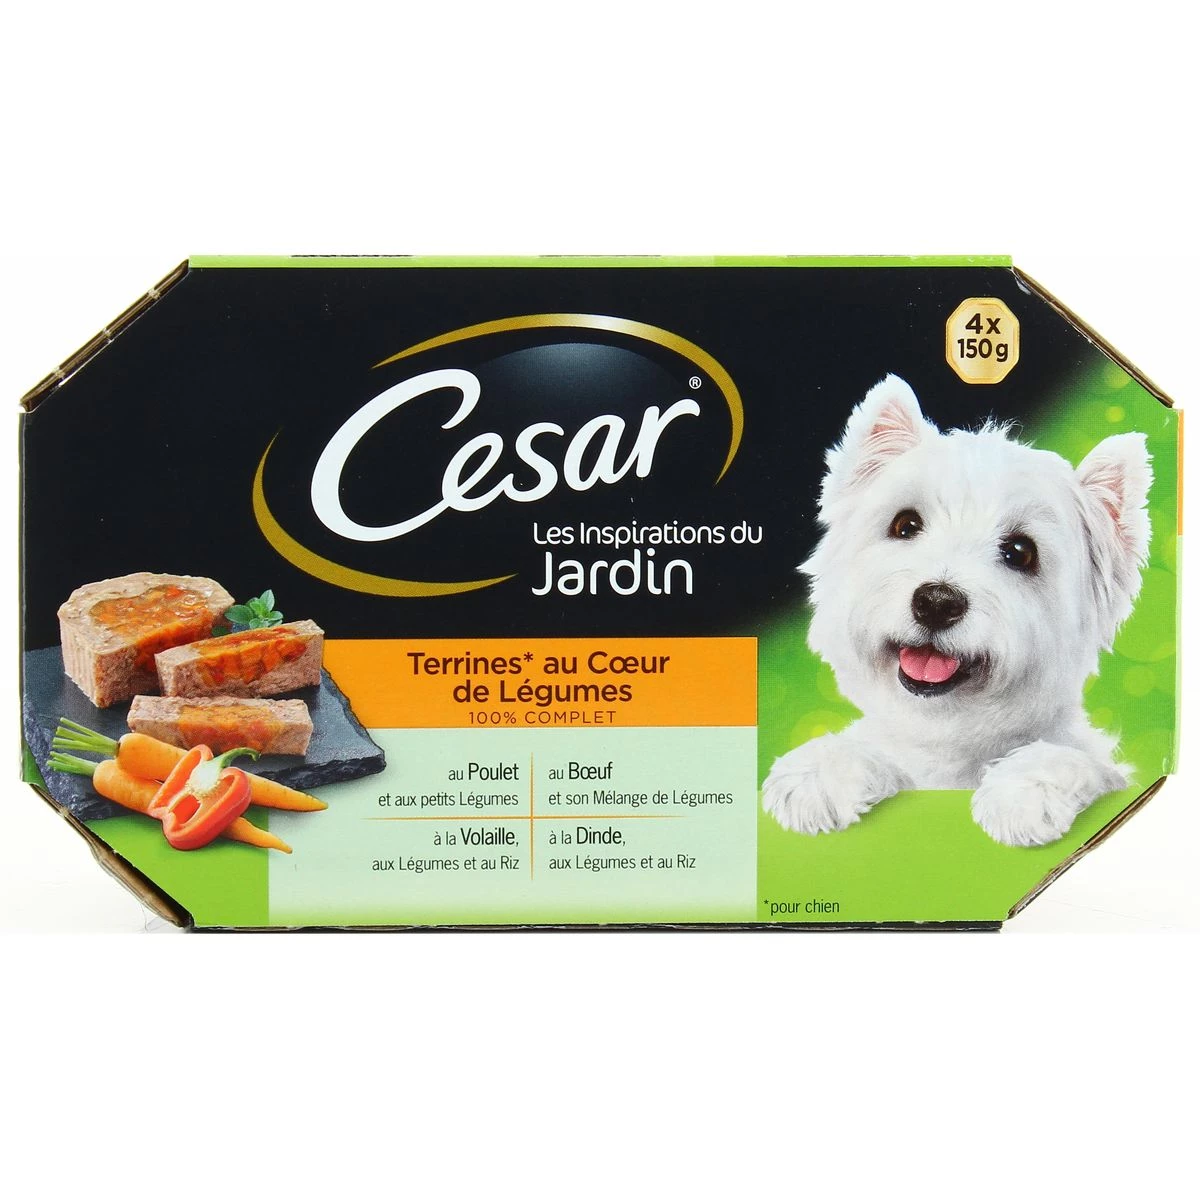 Paté for dogs with vegetable heart 4x150g - CÉSAR